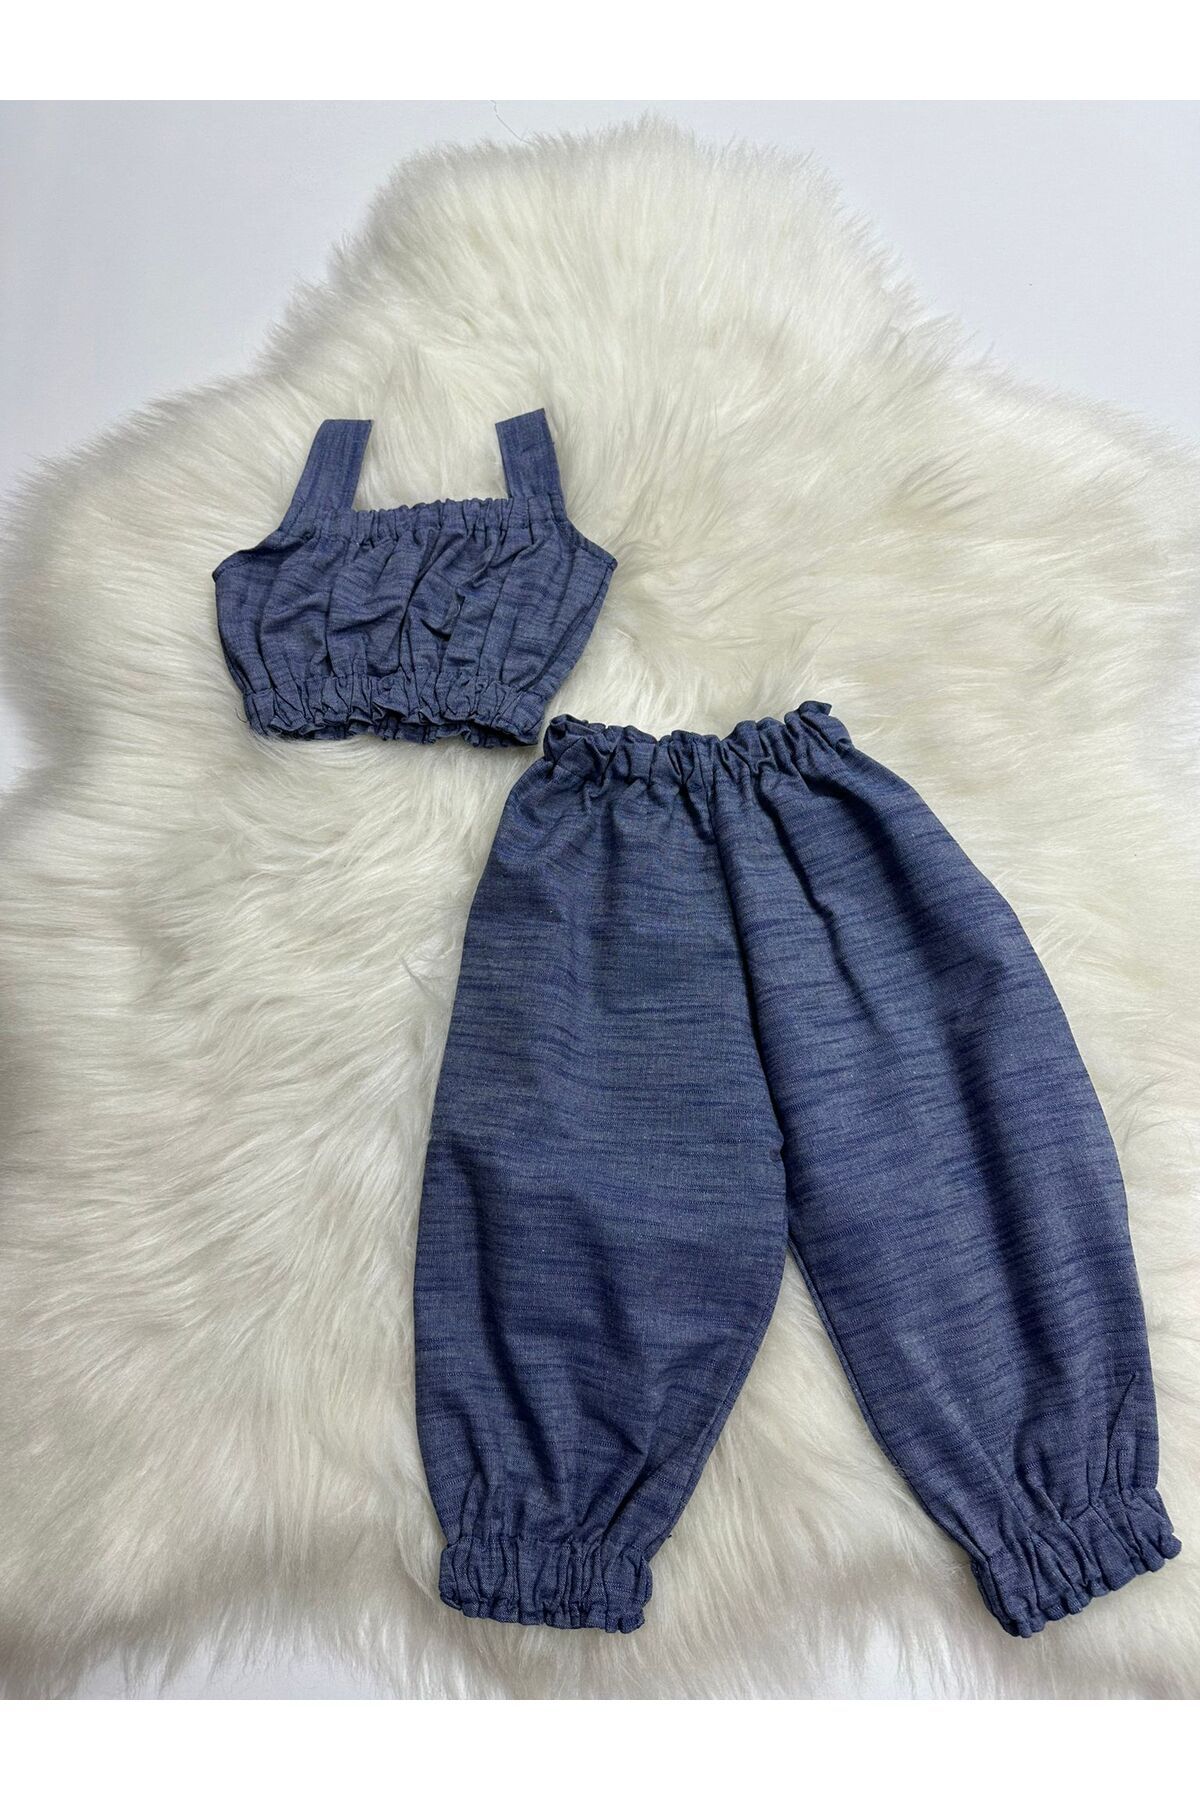 Moda Lina Kot Crop Pantolon Takım